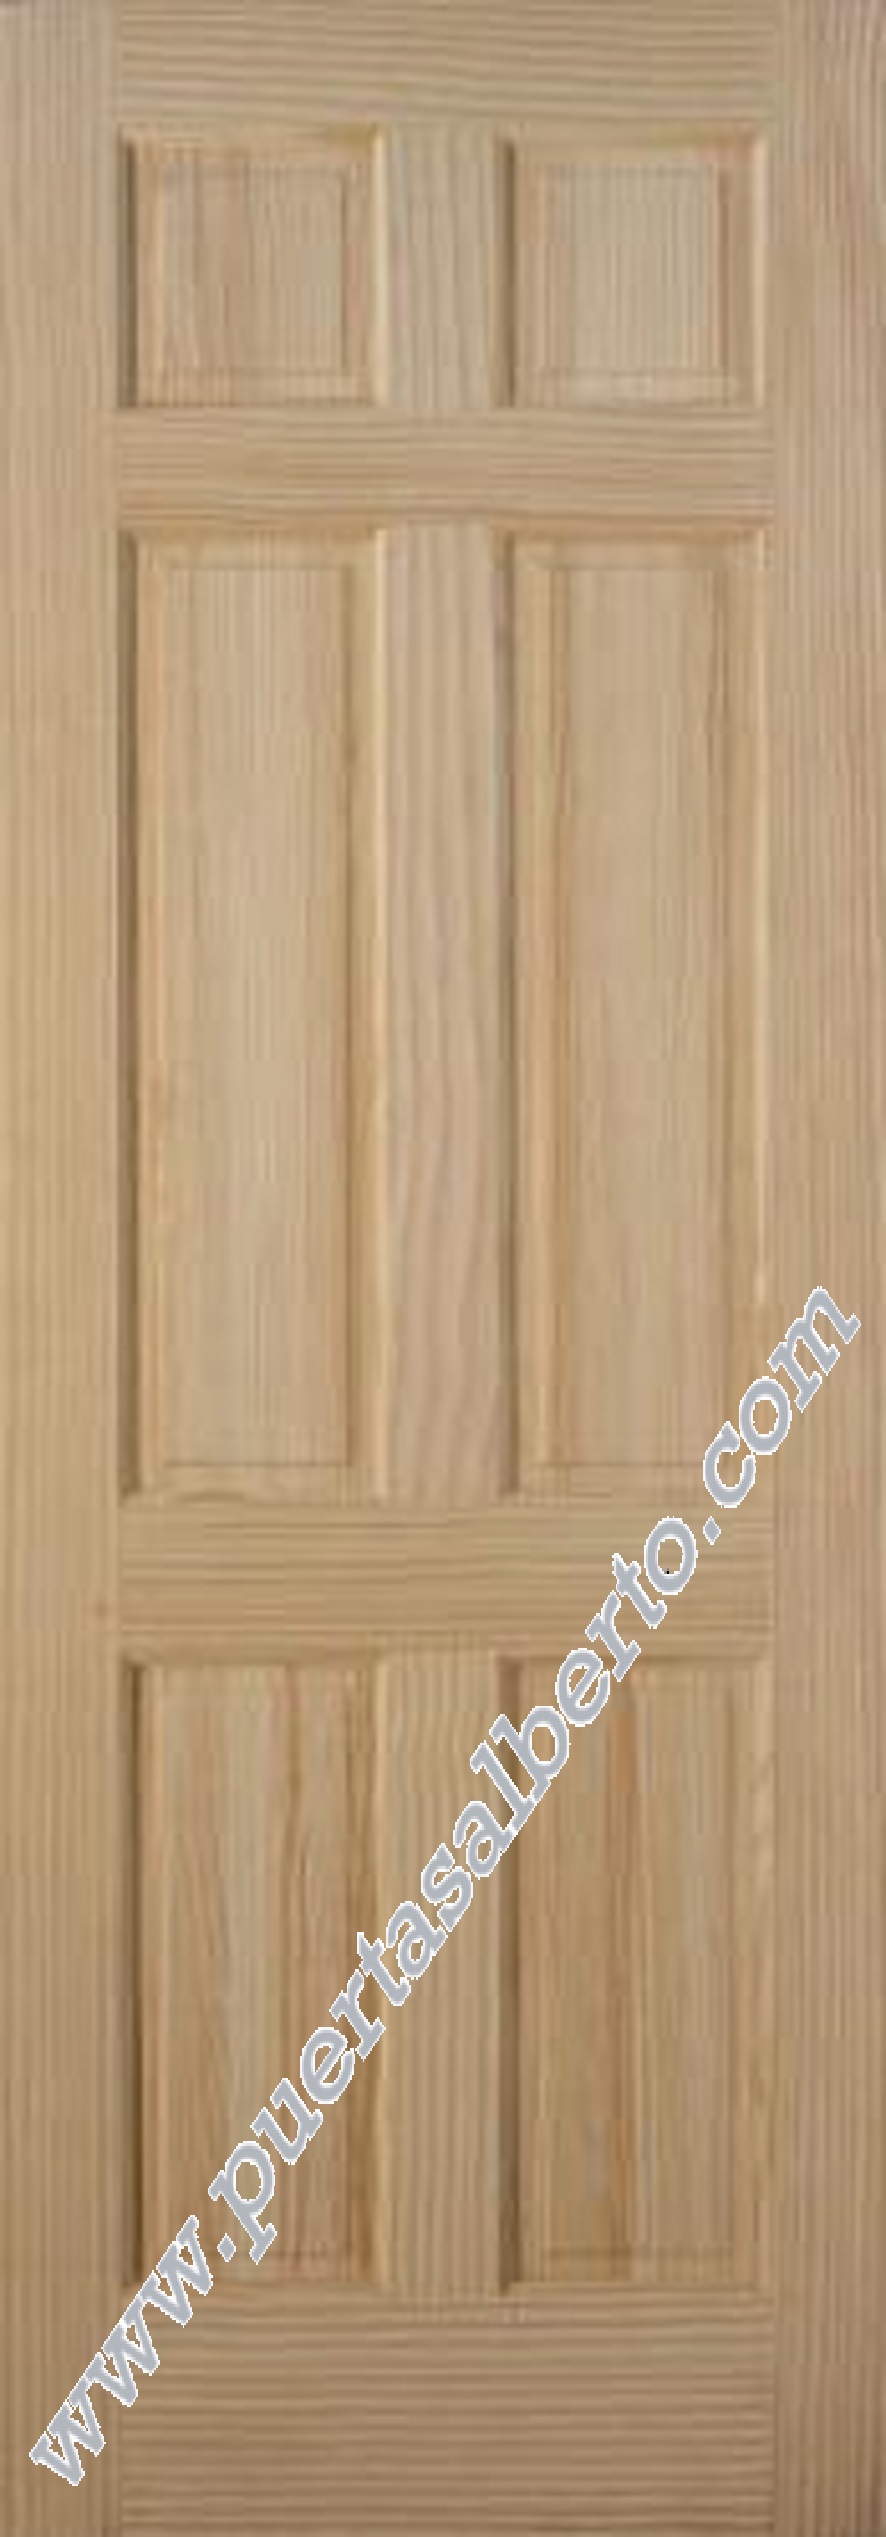 Puerta de madera de pino para barnizar derecha de 95x210 cm